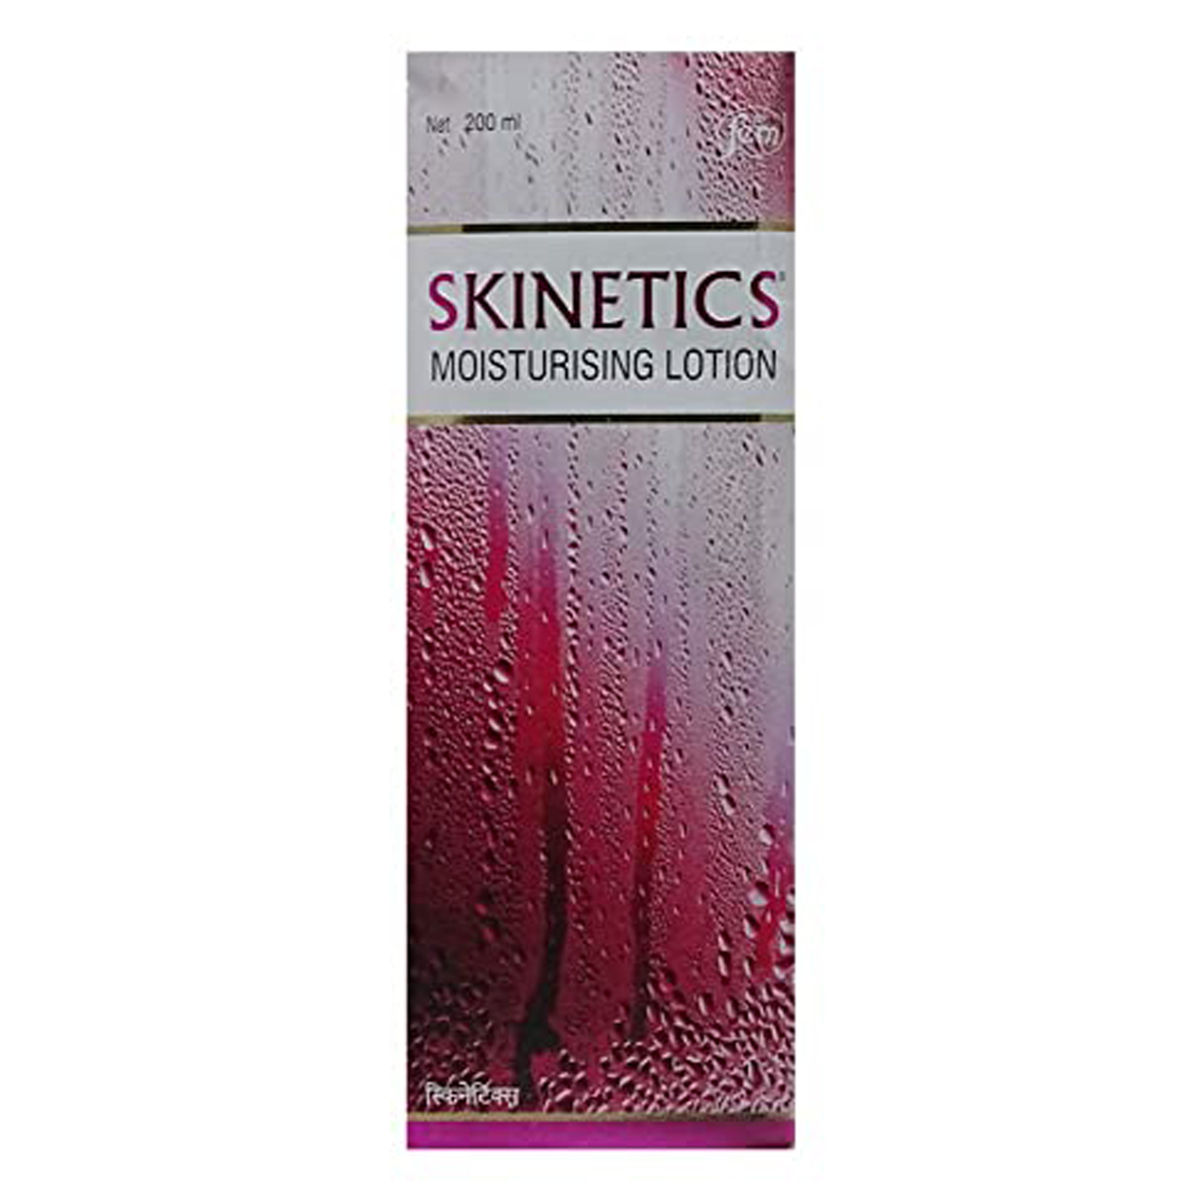 Skinetics Moisturising Lotion, 200 ml, Pack of 1 